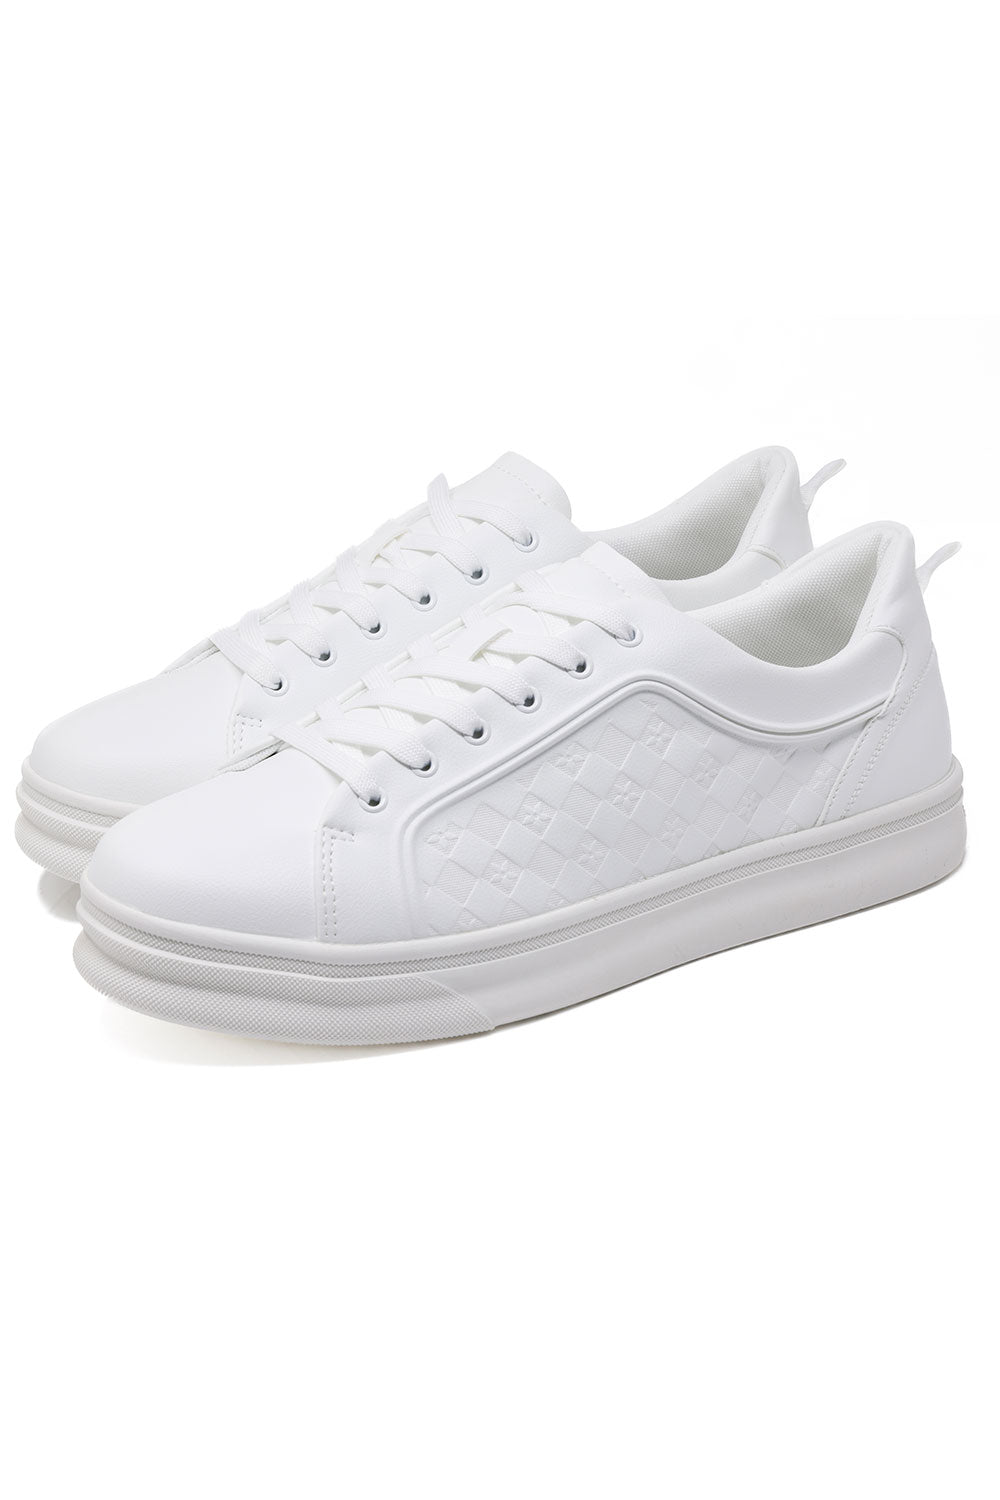 Barabas Men's Checkered Pattern Premium Leather Sneakers 4SK04 White